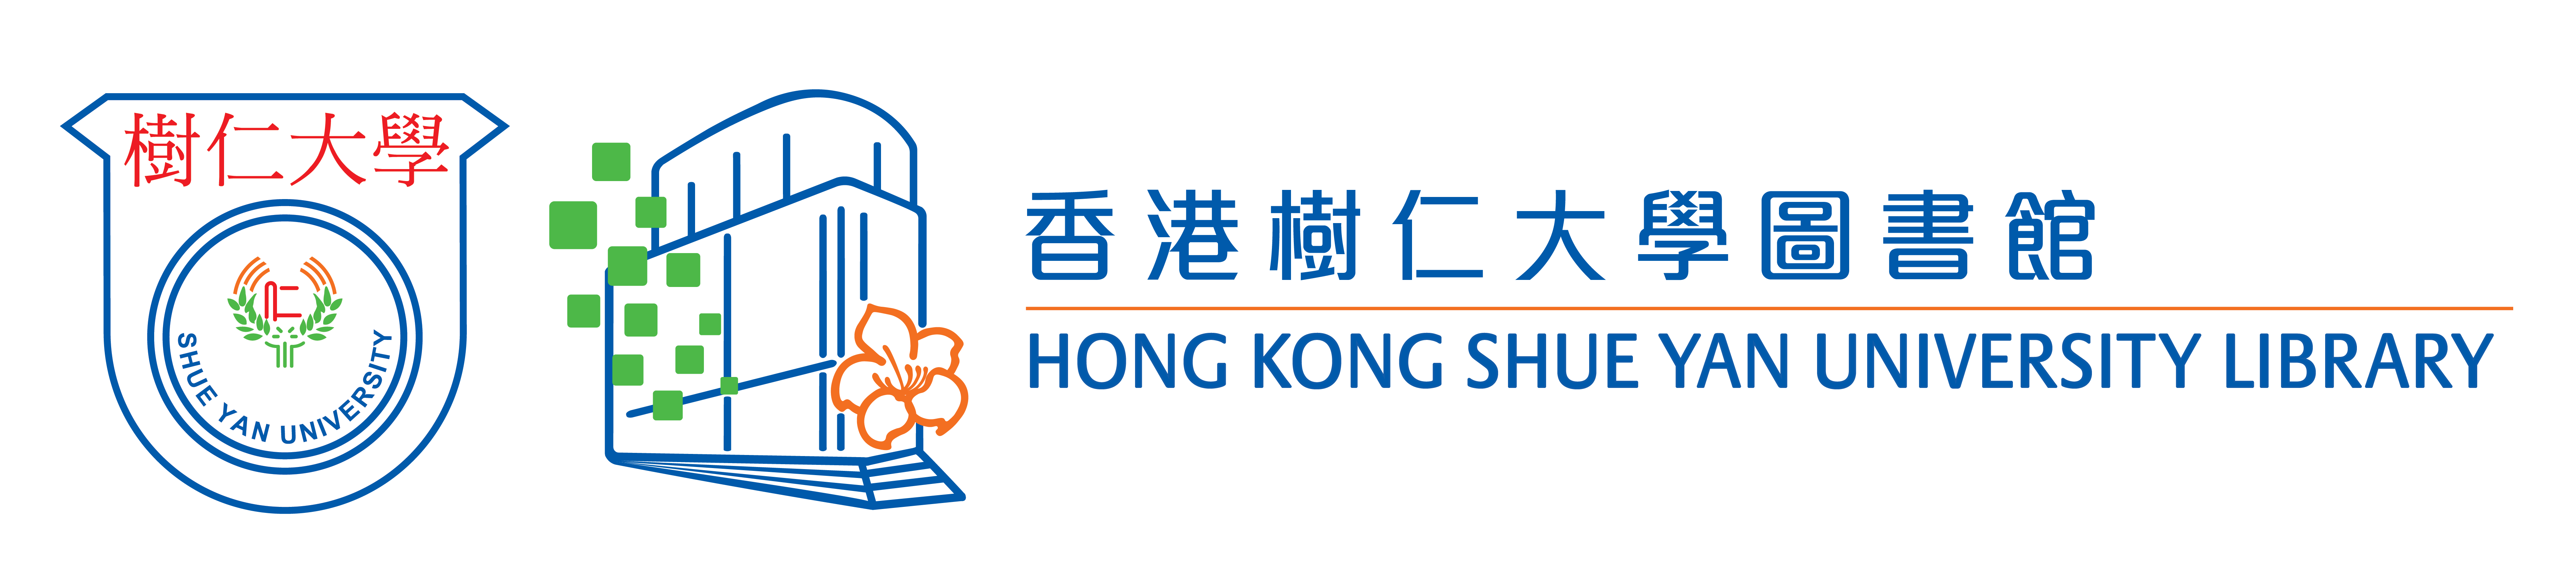 www.hksyu.edu.hk